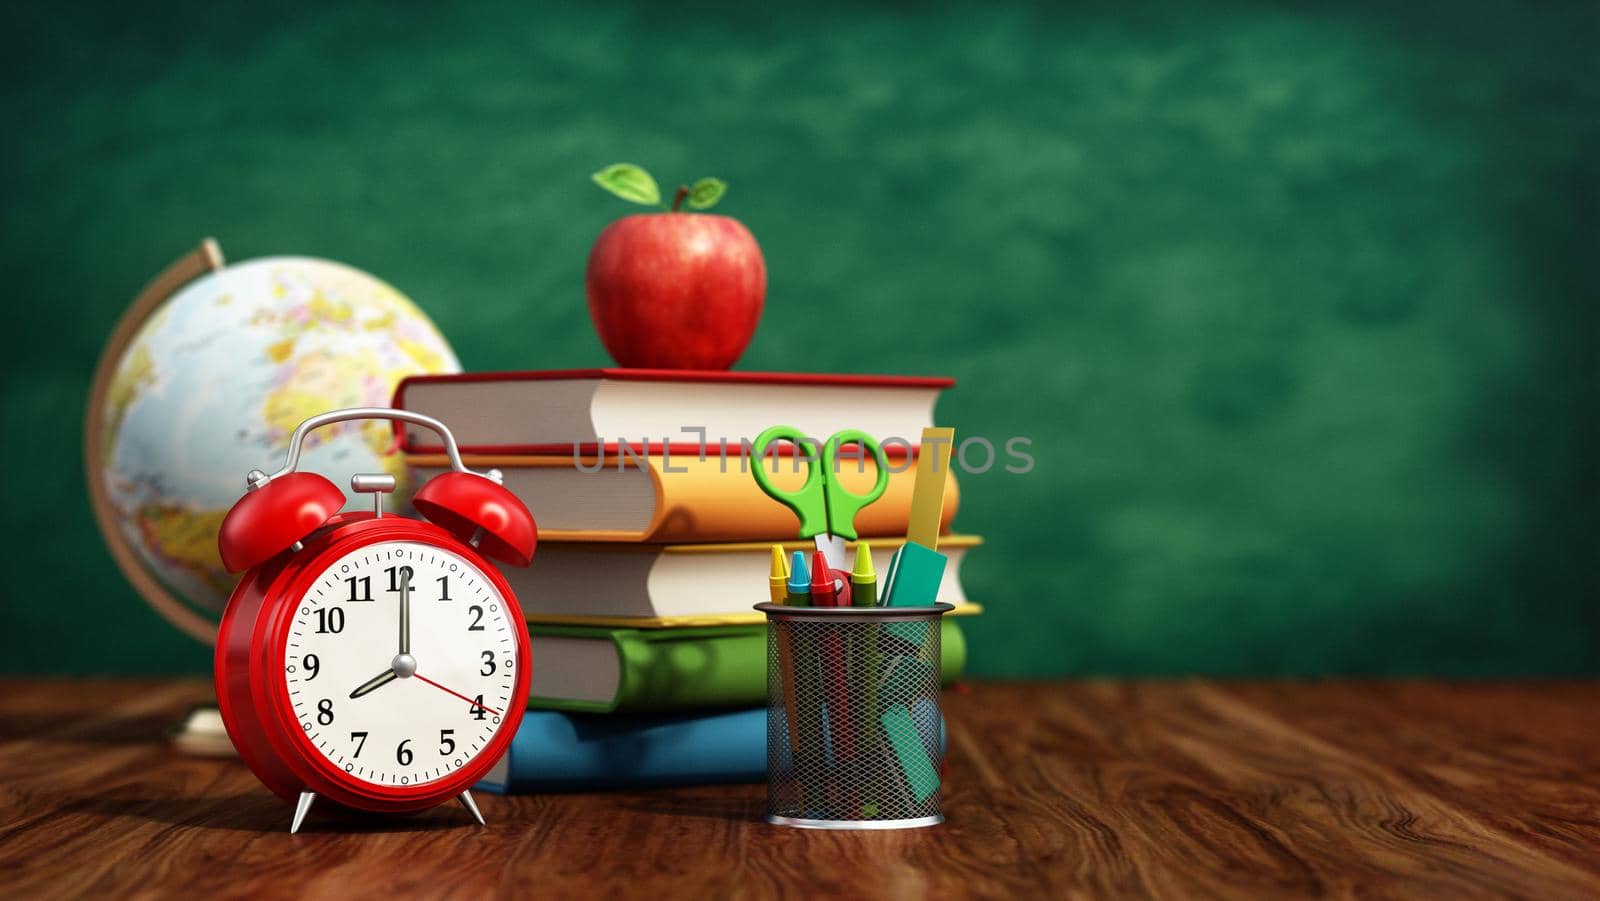 Red apple, books, pencil holder, model globe and alarm clock on green board. 3D illustration.